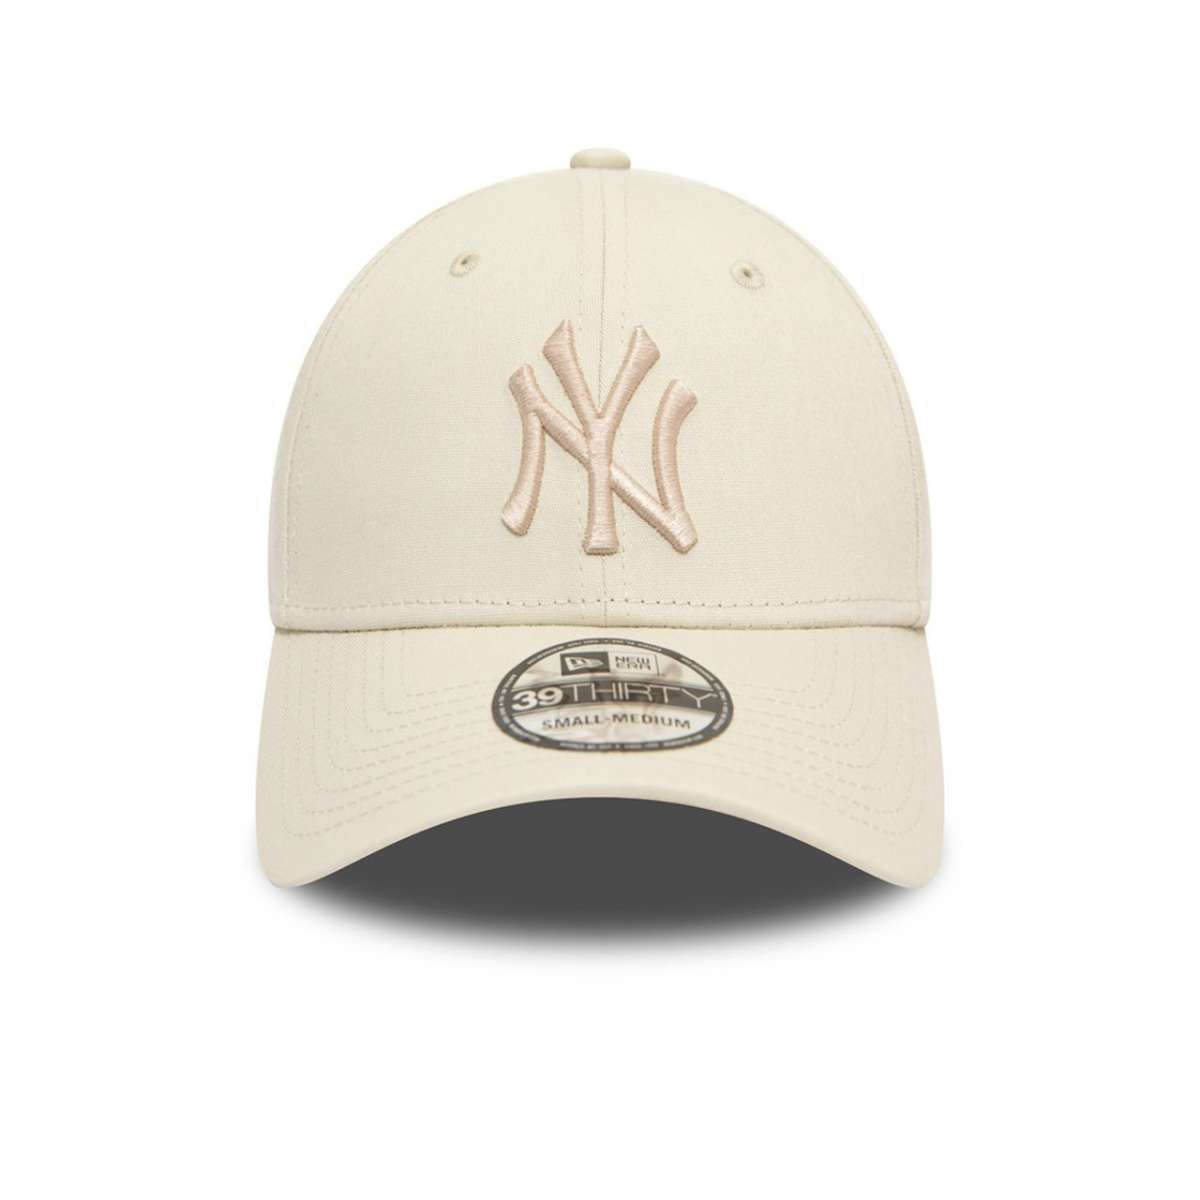 New Era 39Thirty Flexfit Cap - New York Yankees stone beige | Stretch